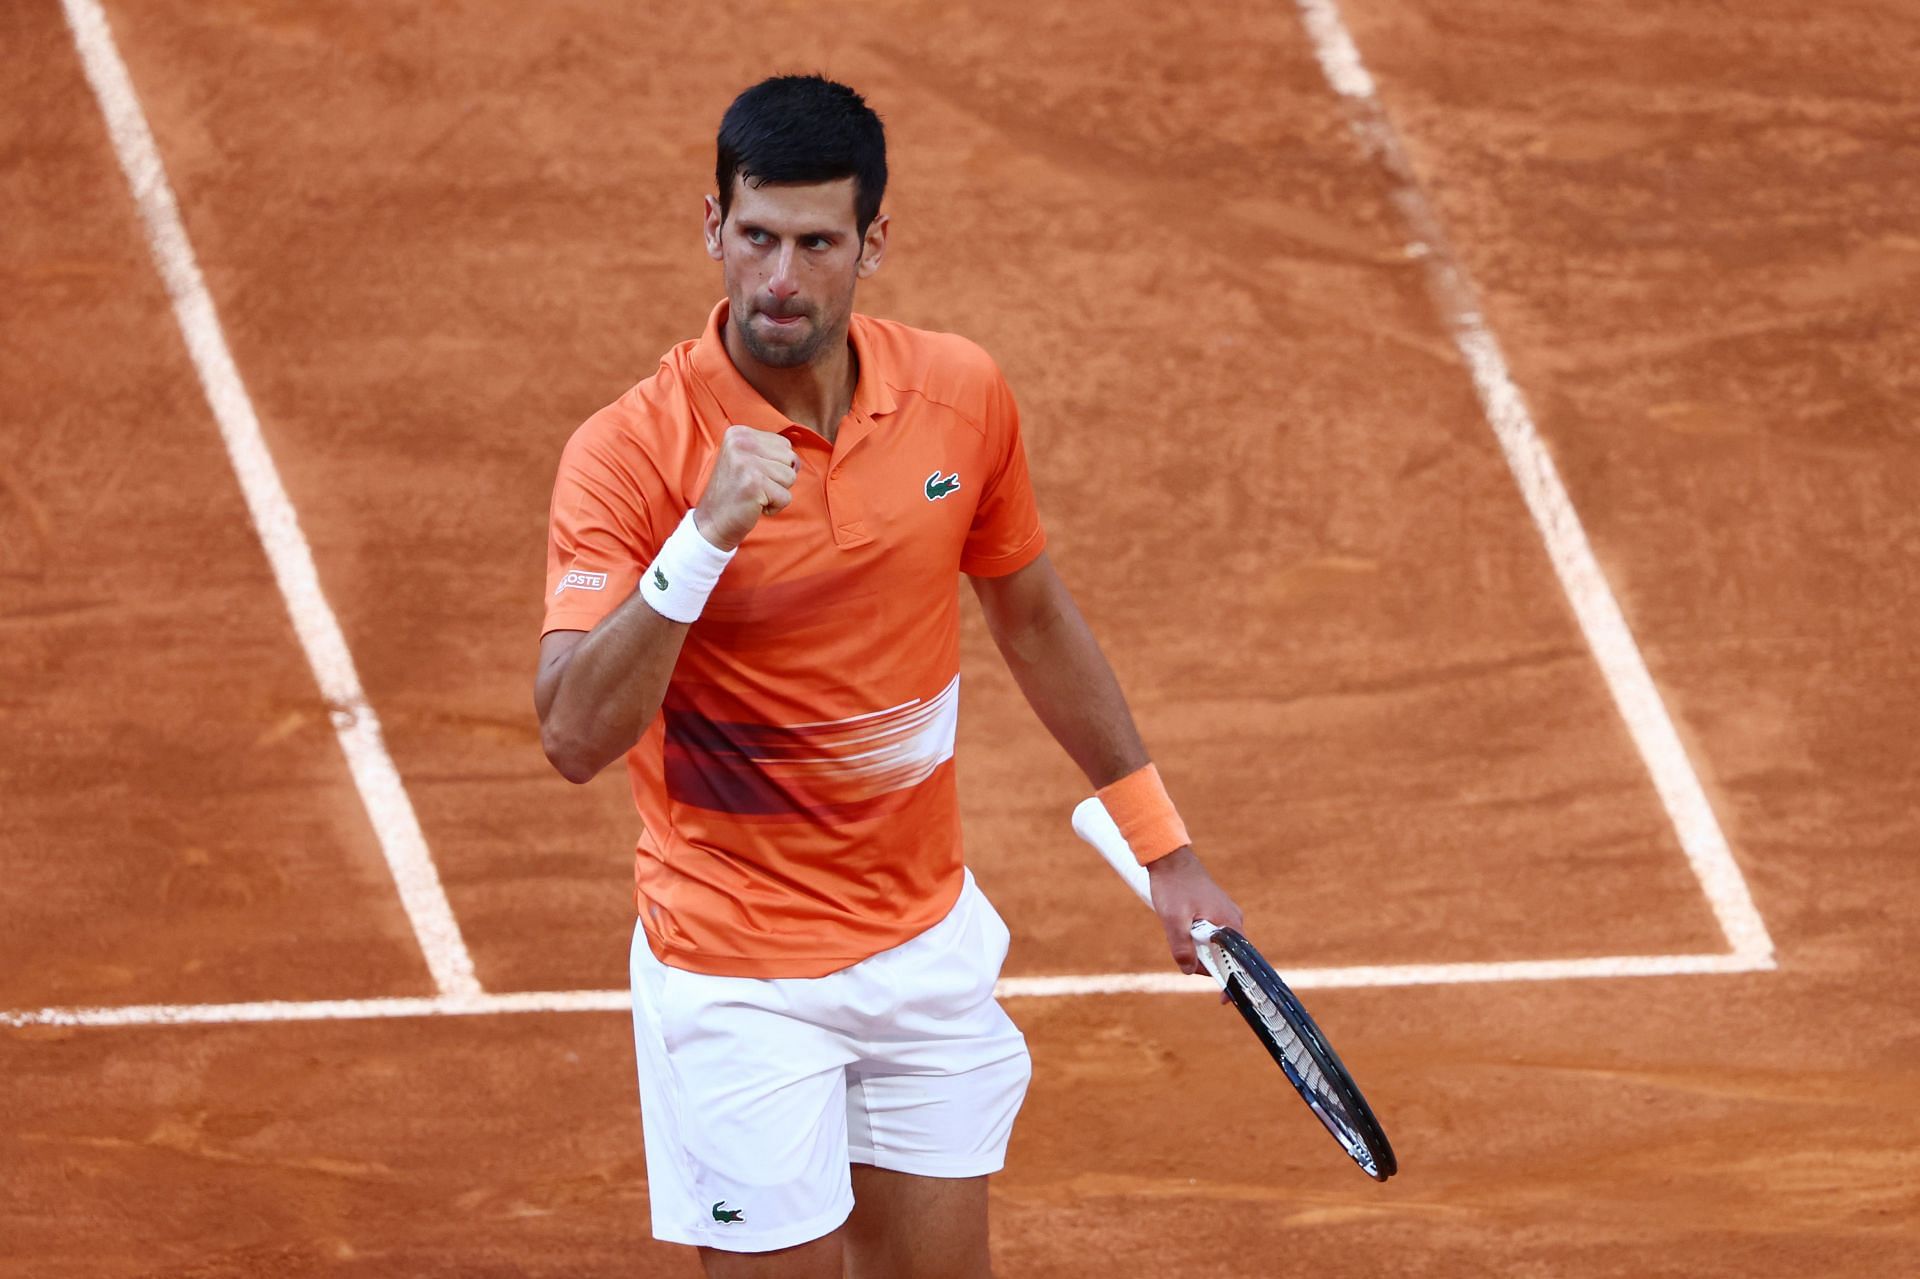 Novak Djokovics next match Opponent, venue, live streaming, TV channel and schedule Italian Open 2022 3rd Round